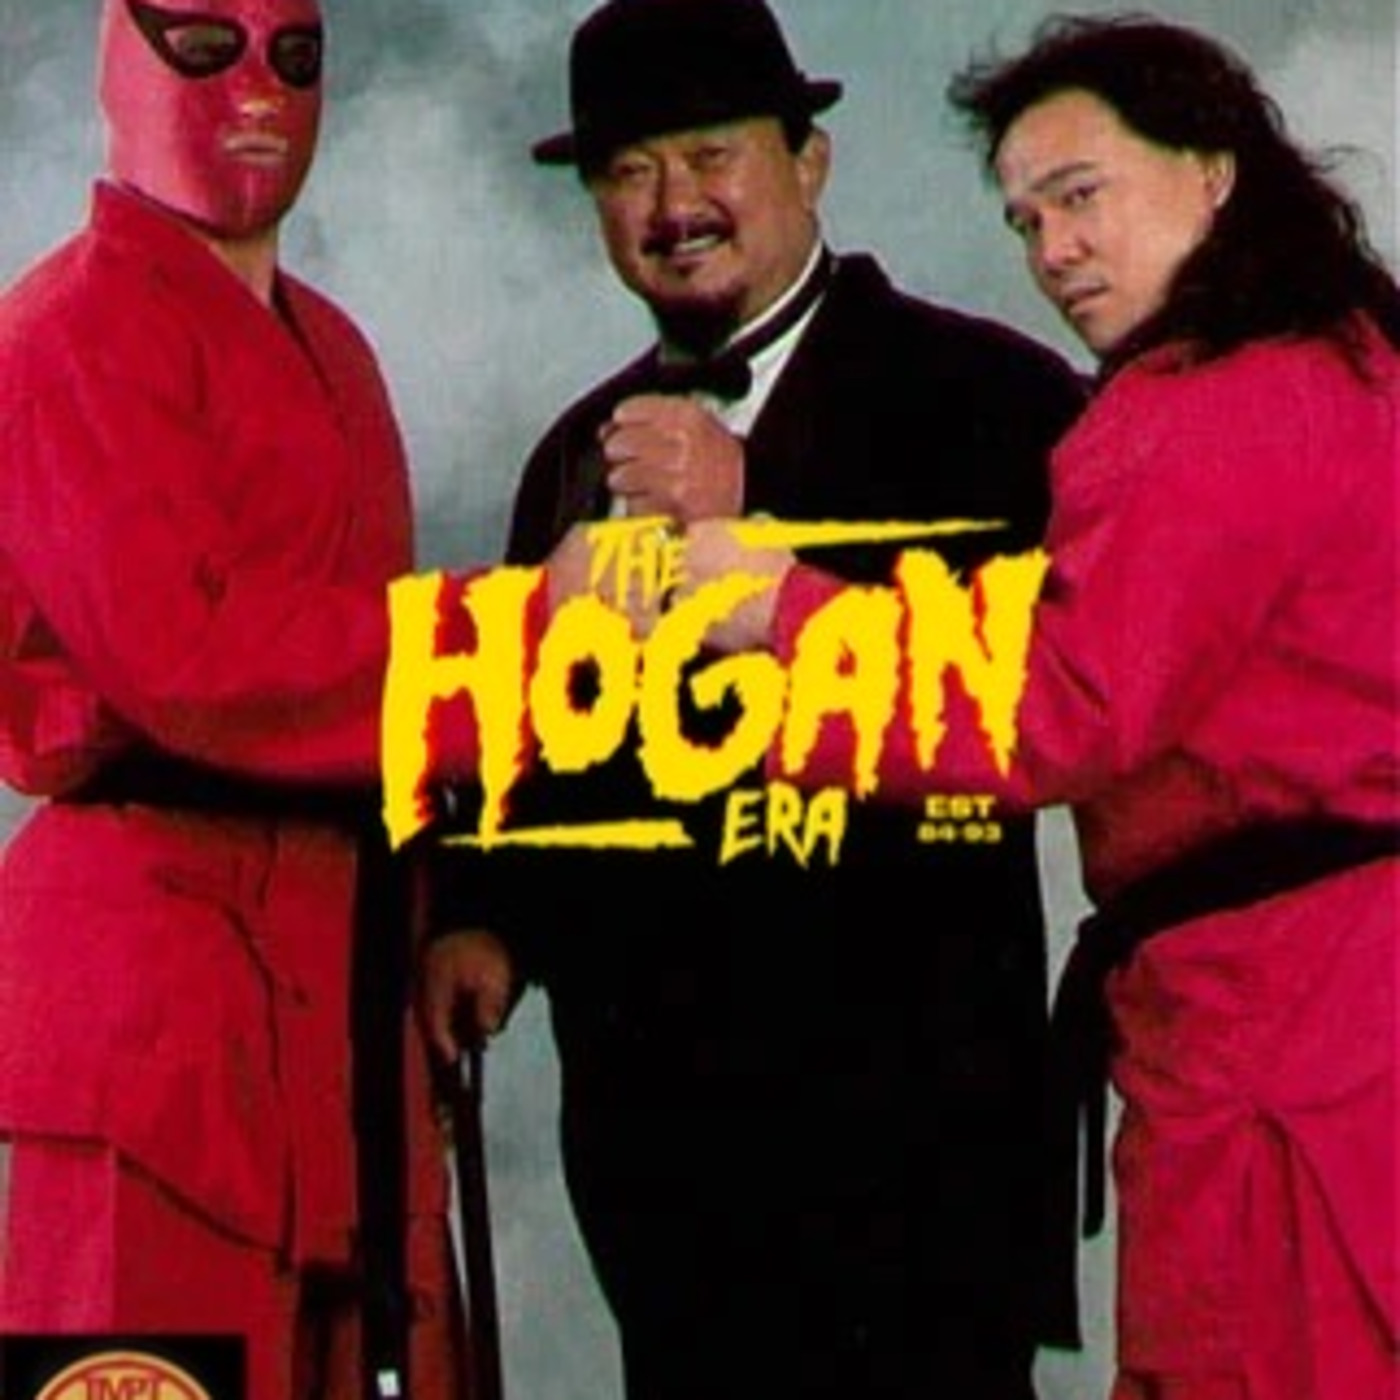 Episode 117: The Hogan Era - The Orient Express